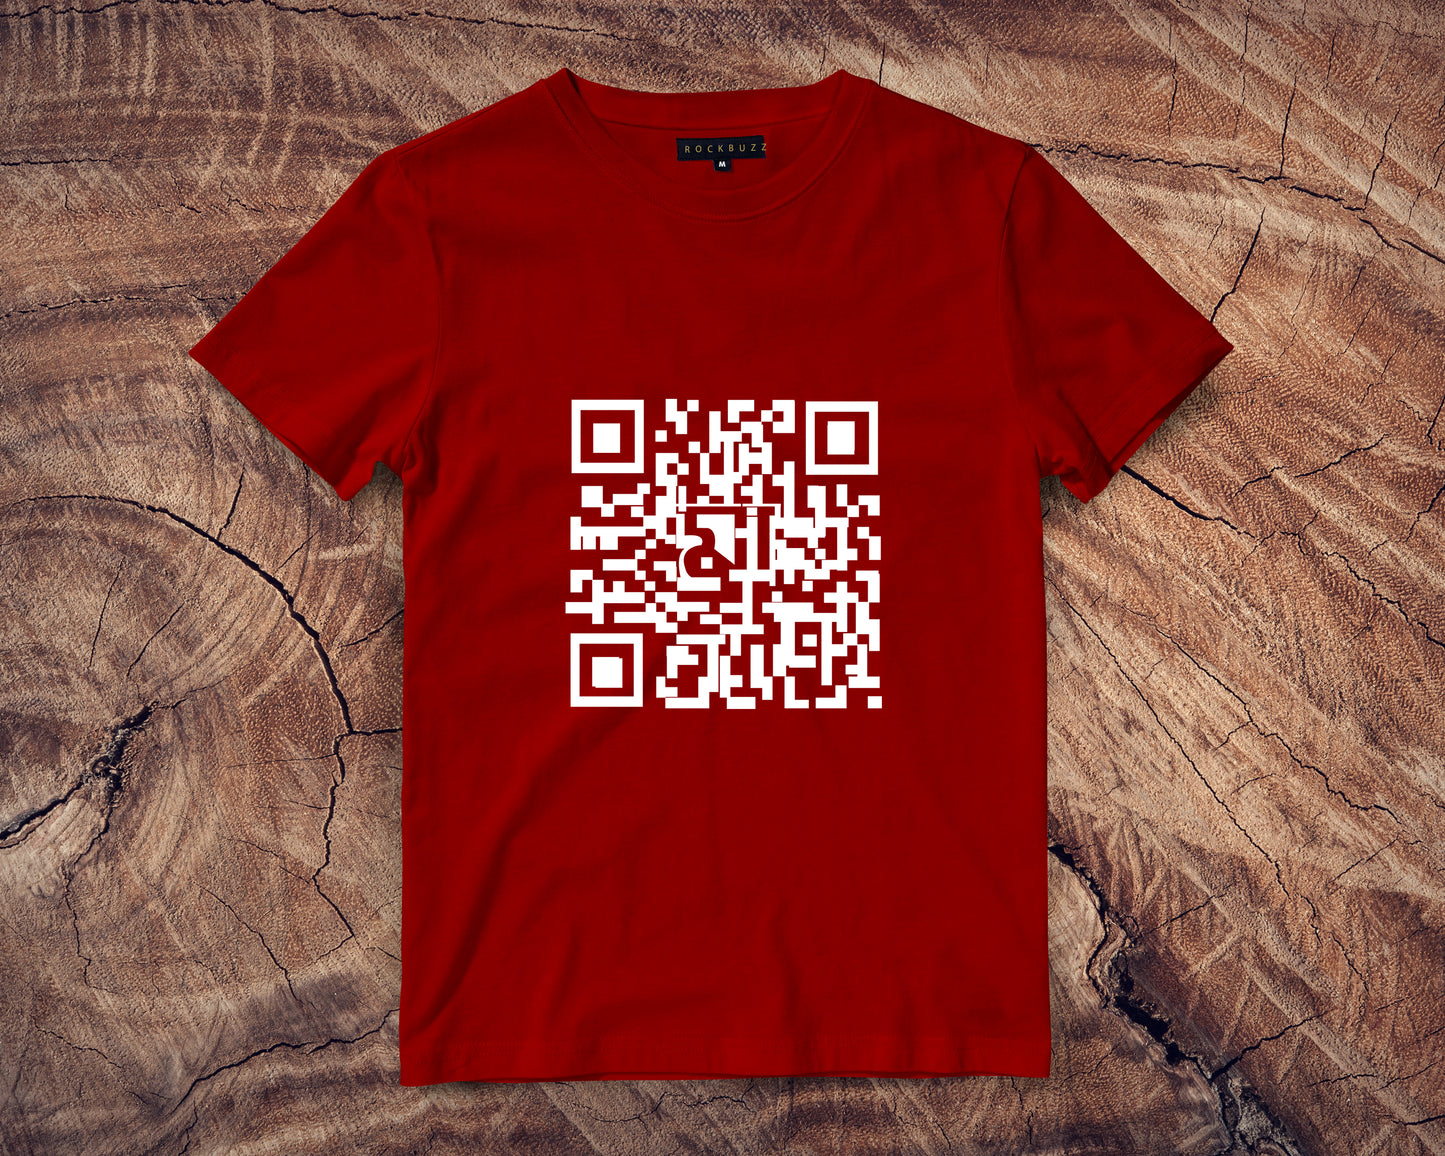 Maa QR code printed Tshirt